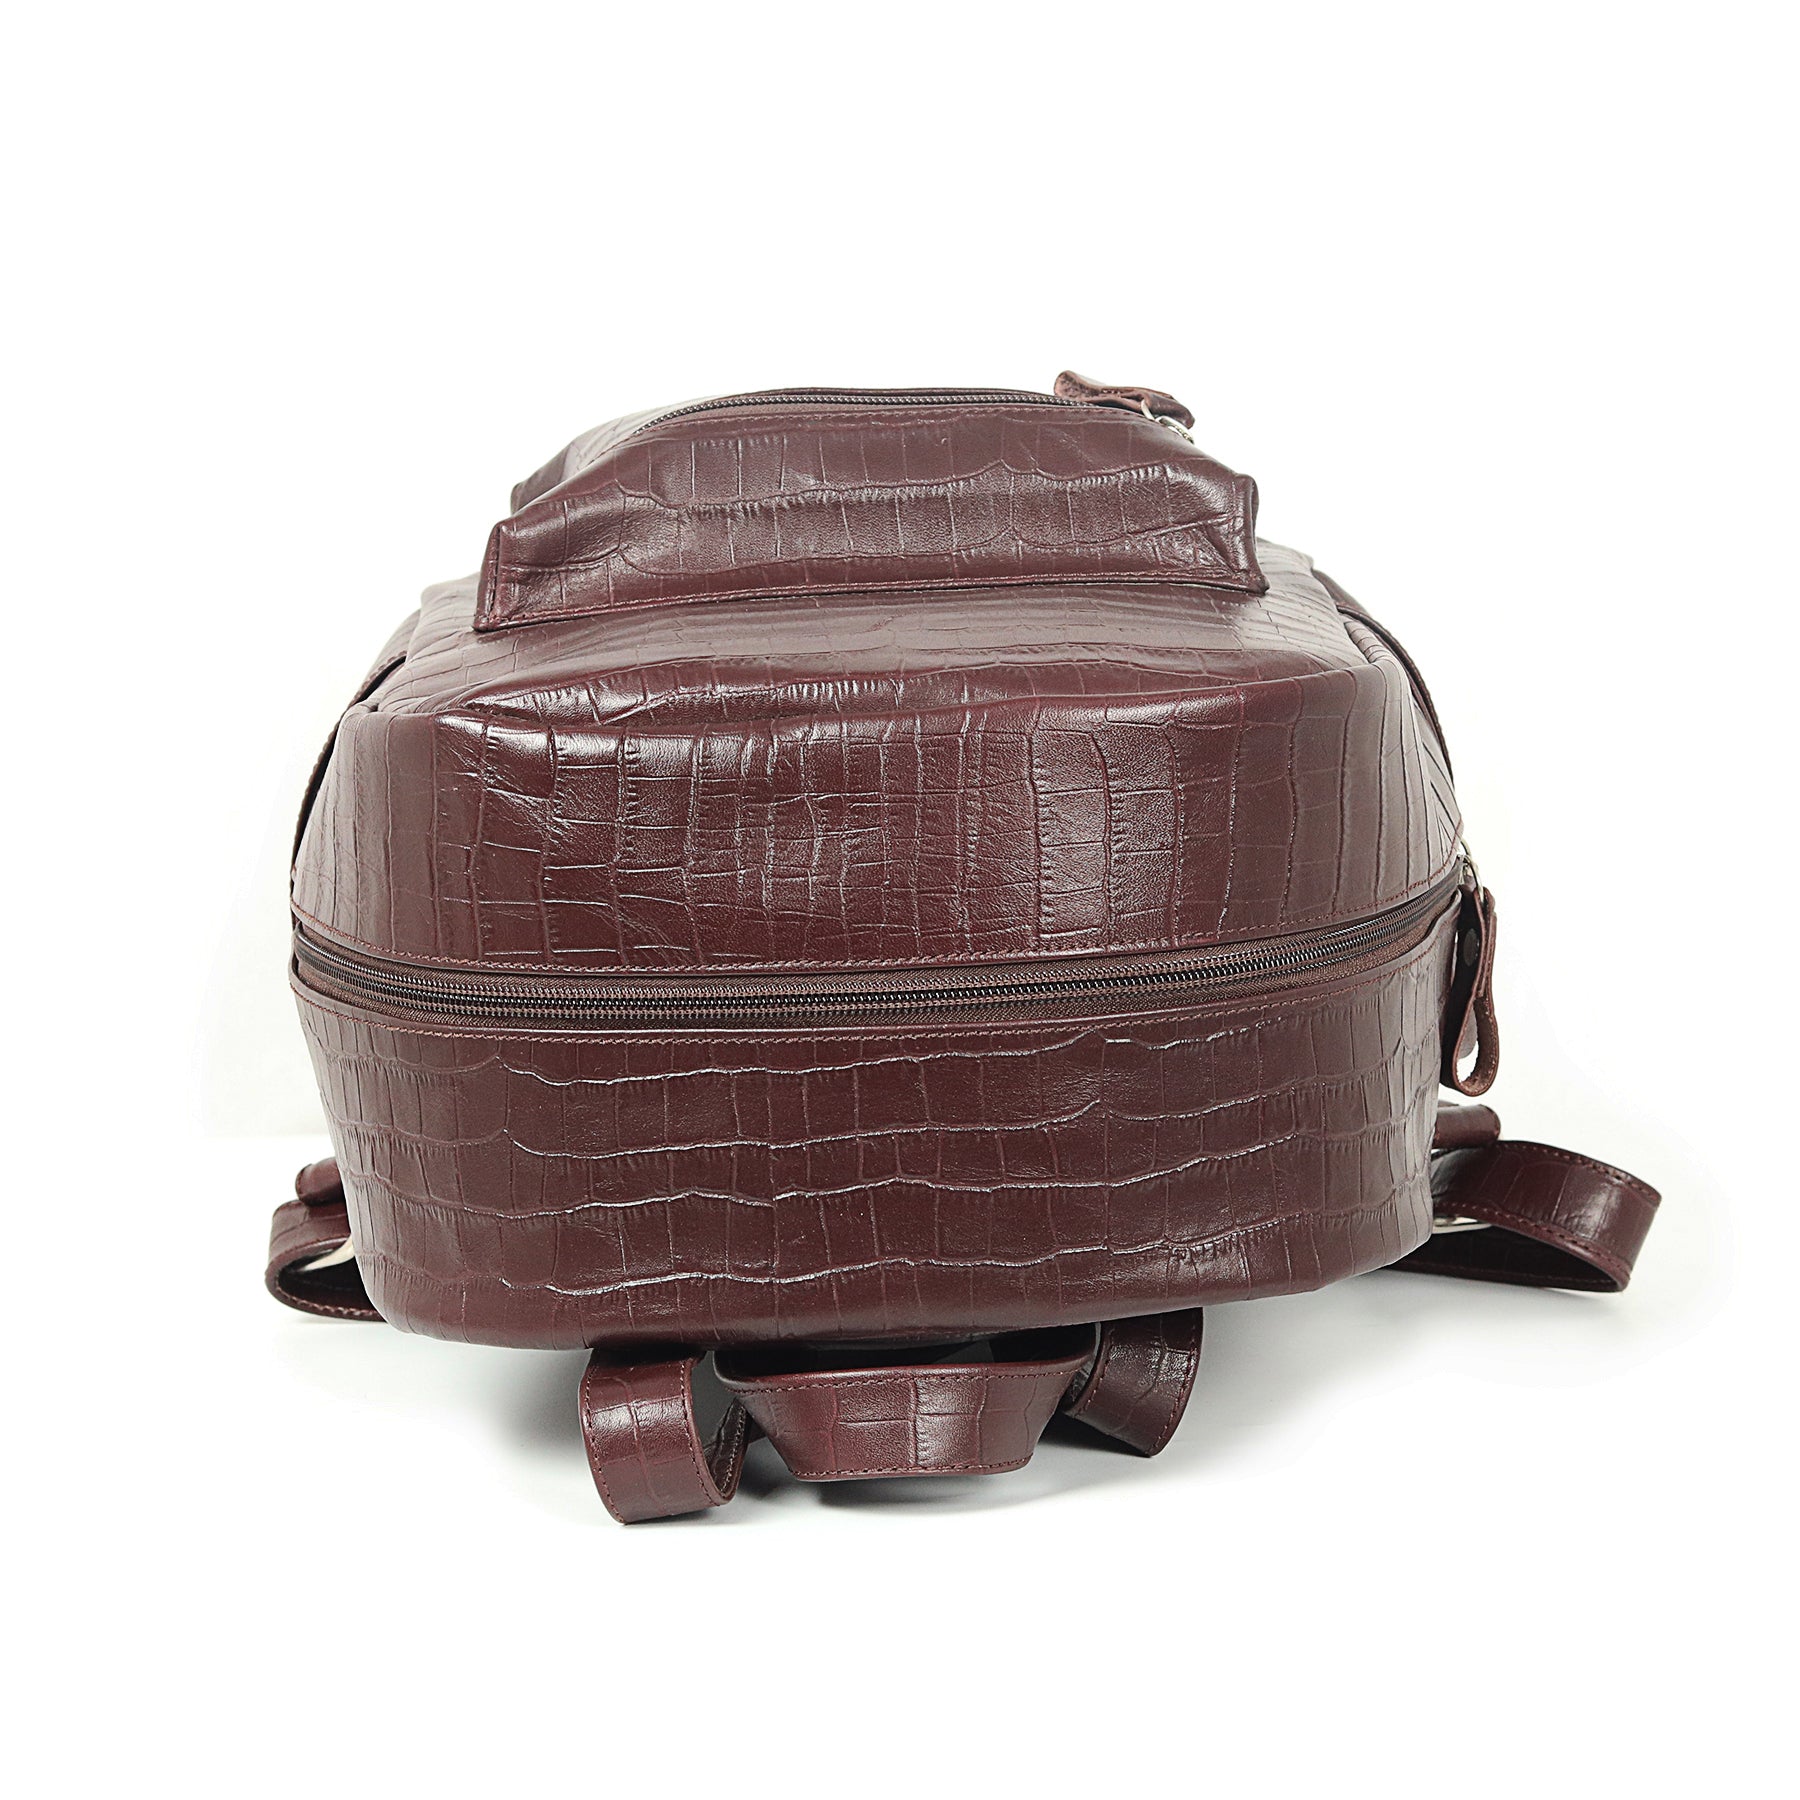 Zays Crocodile Embossed Leather Backpack (Chocolate) - ZAYSBG07